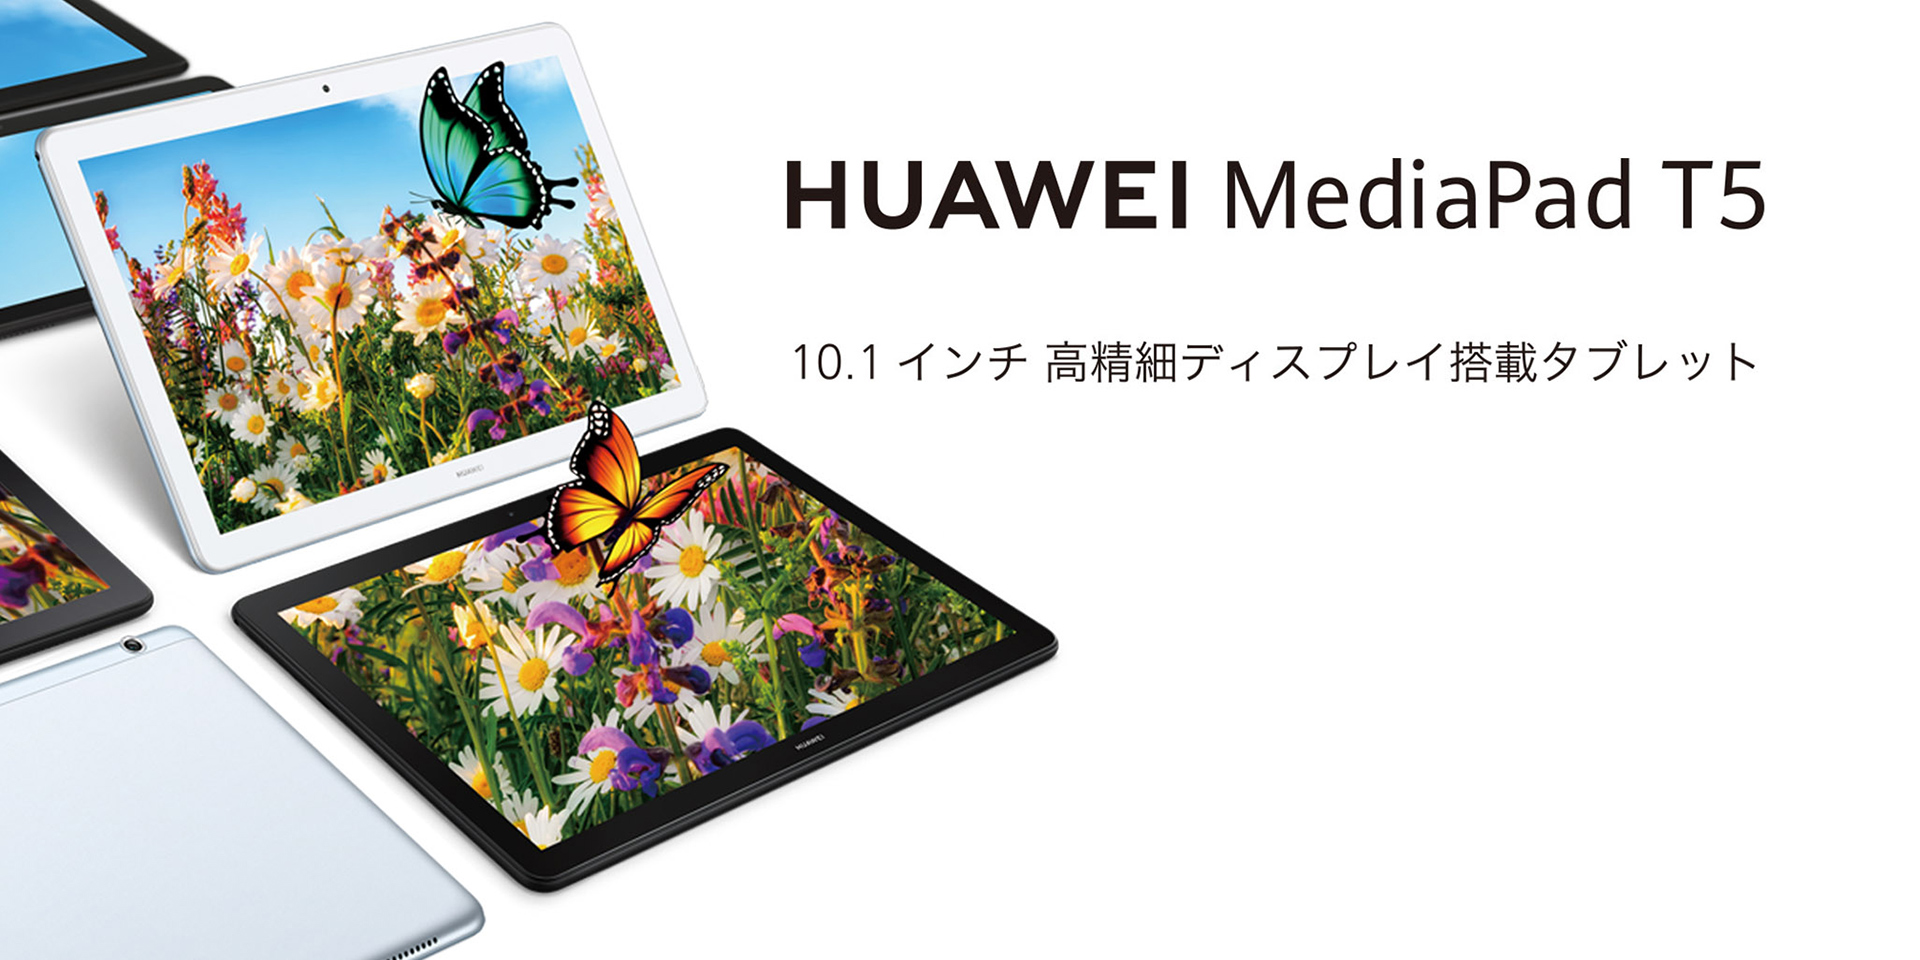 HUAWEI MediaPad T5 